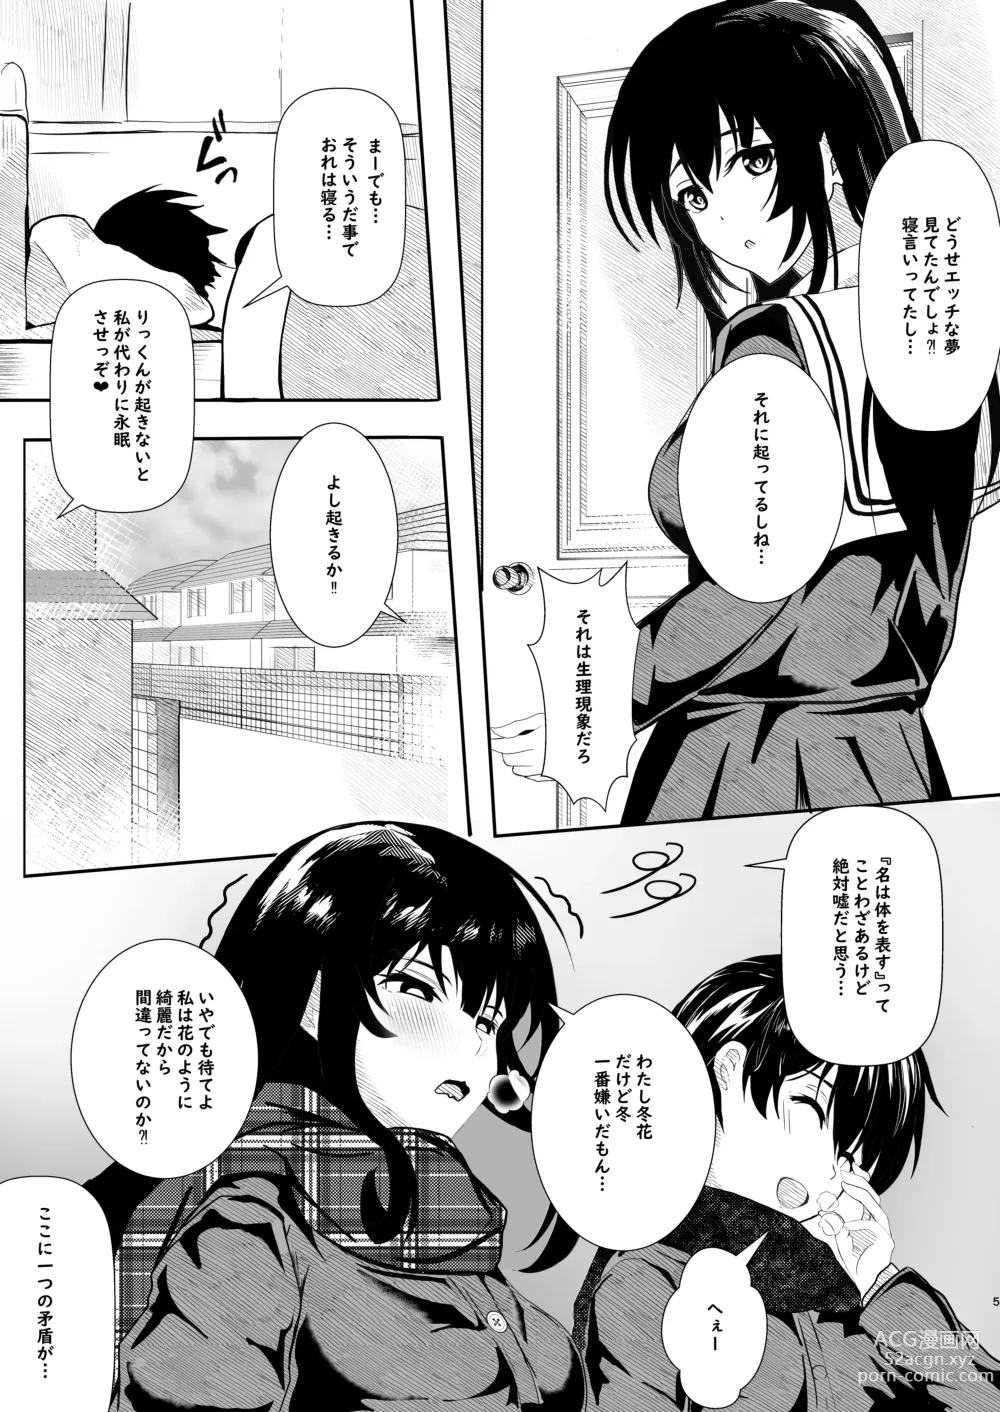 Page 5 of manga Kanojo kara no Present